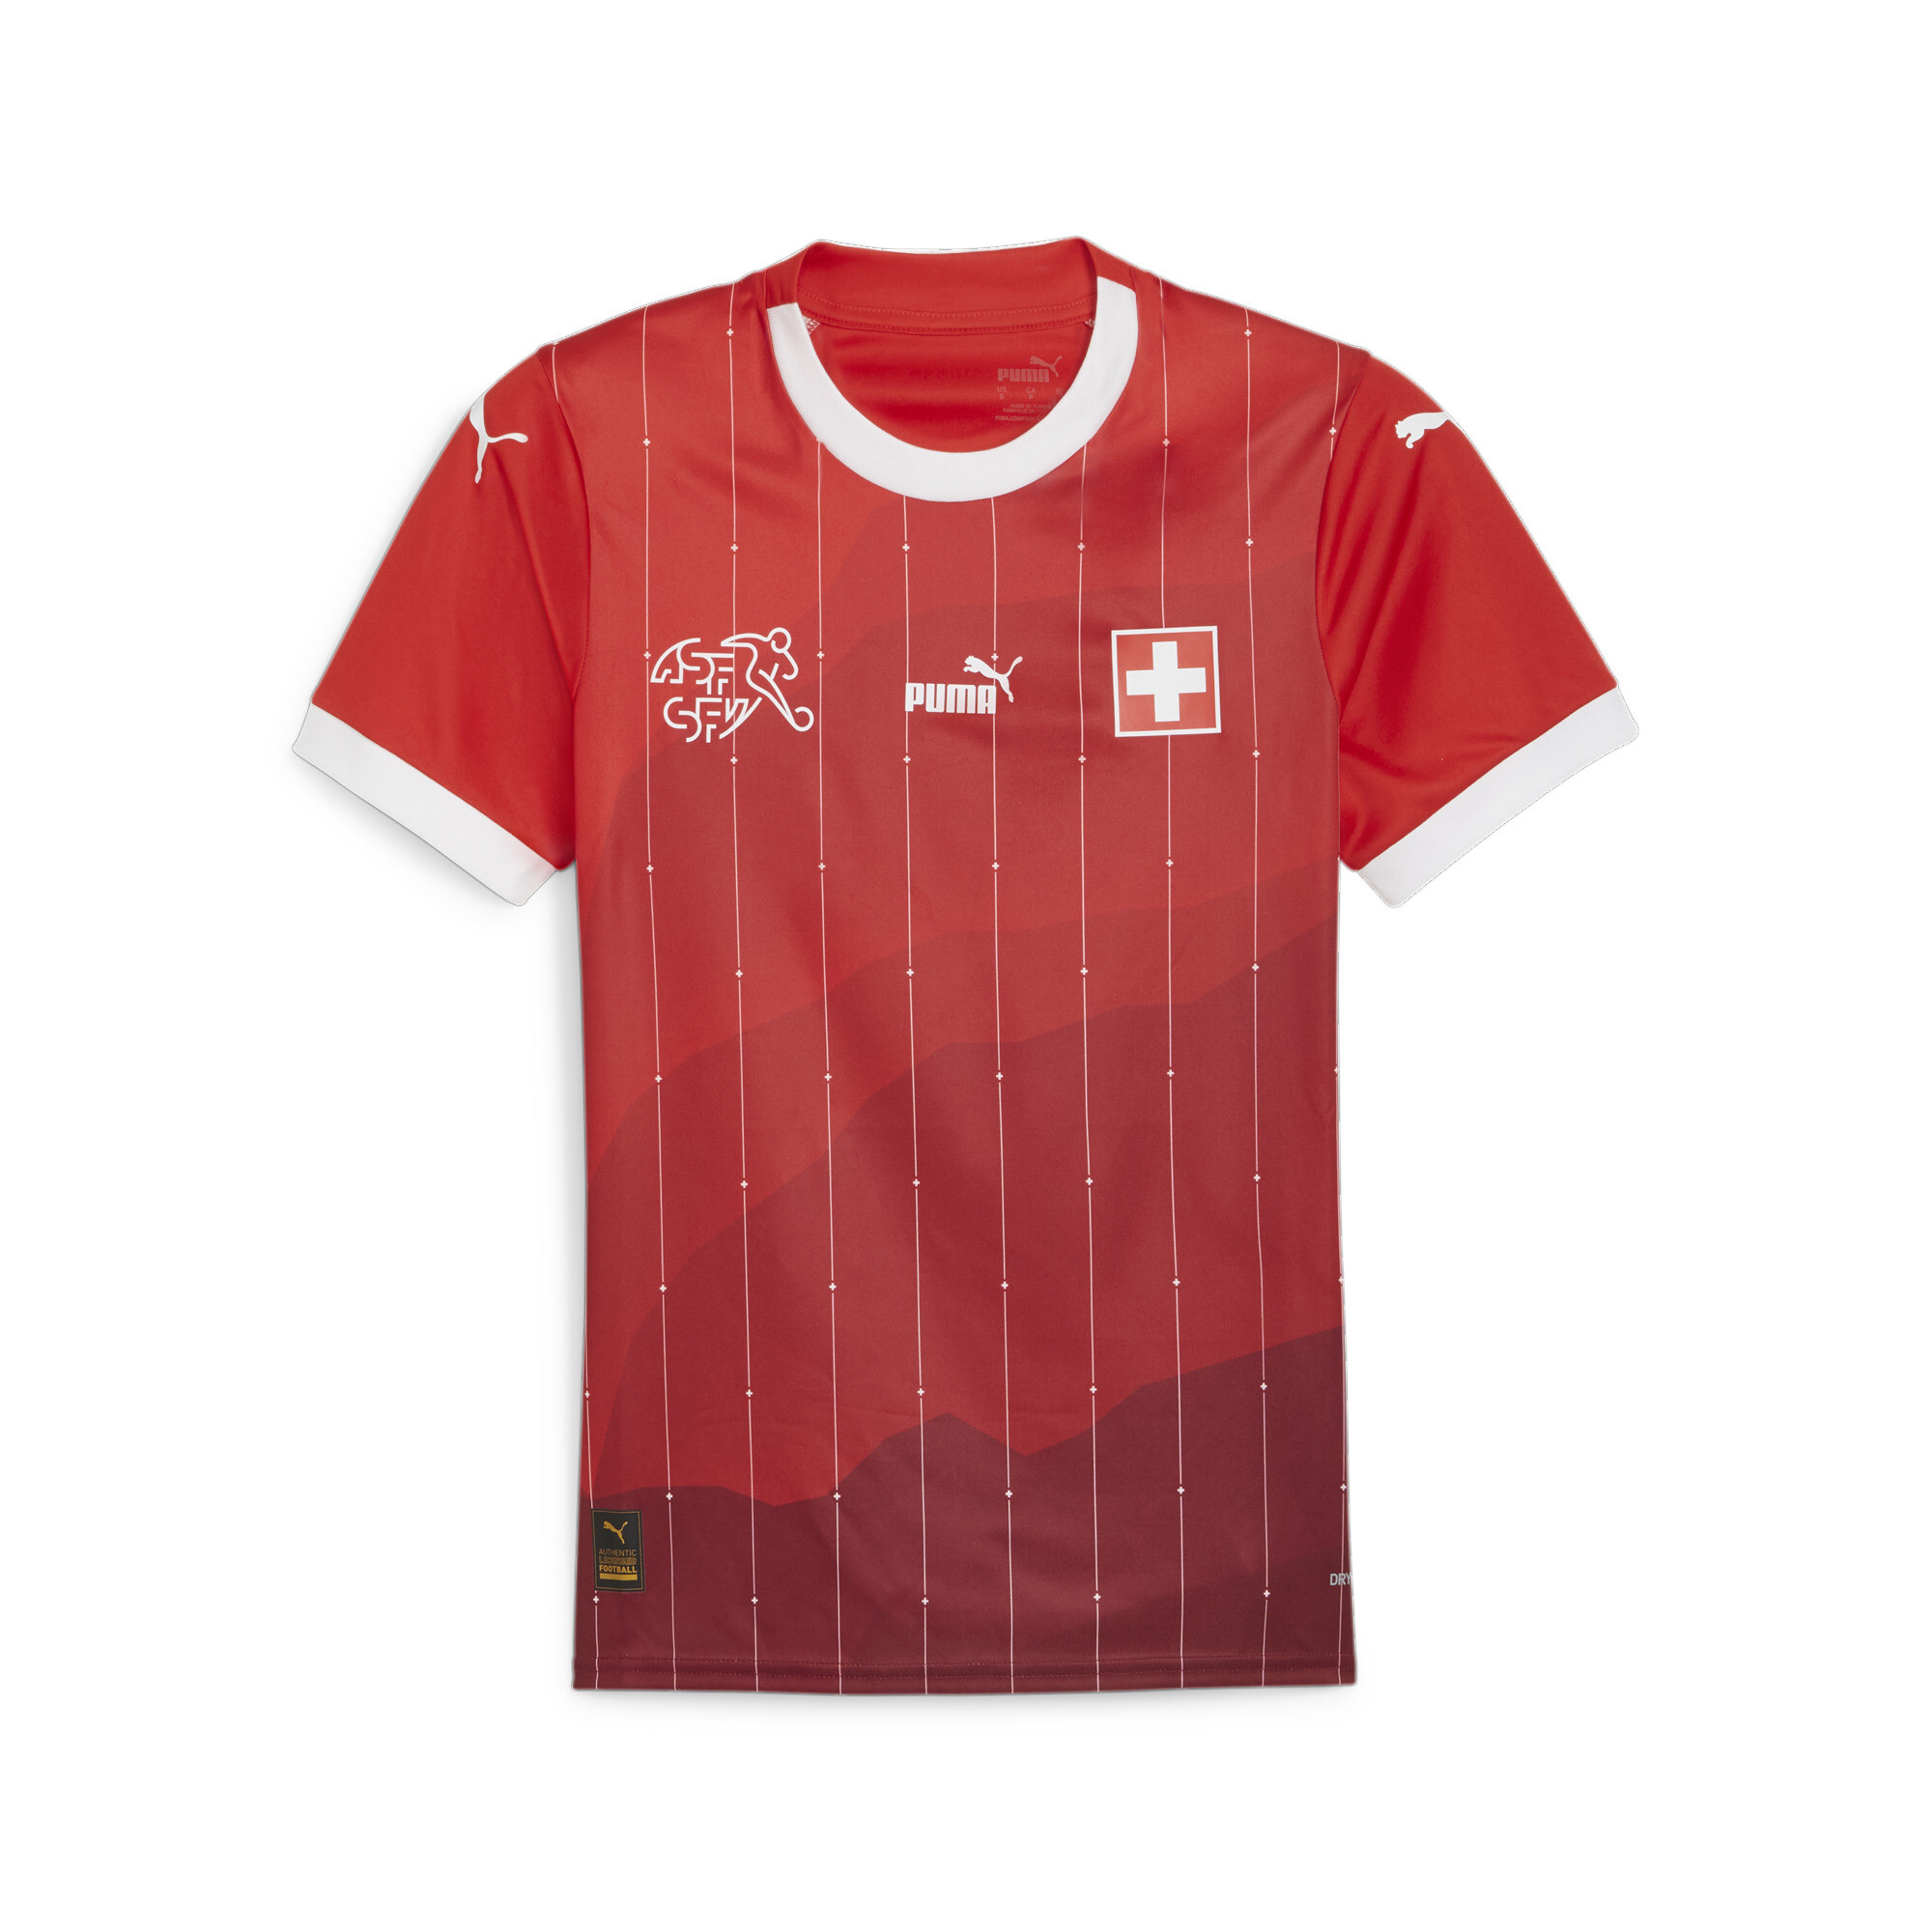 Women's PUMA Switzerland 23/24 World Cup Home Jersey In Red, Size Medium